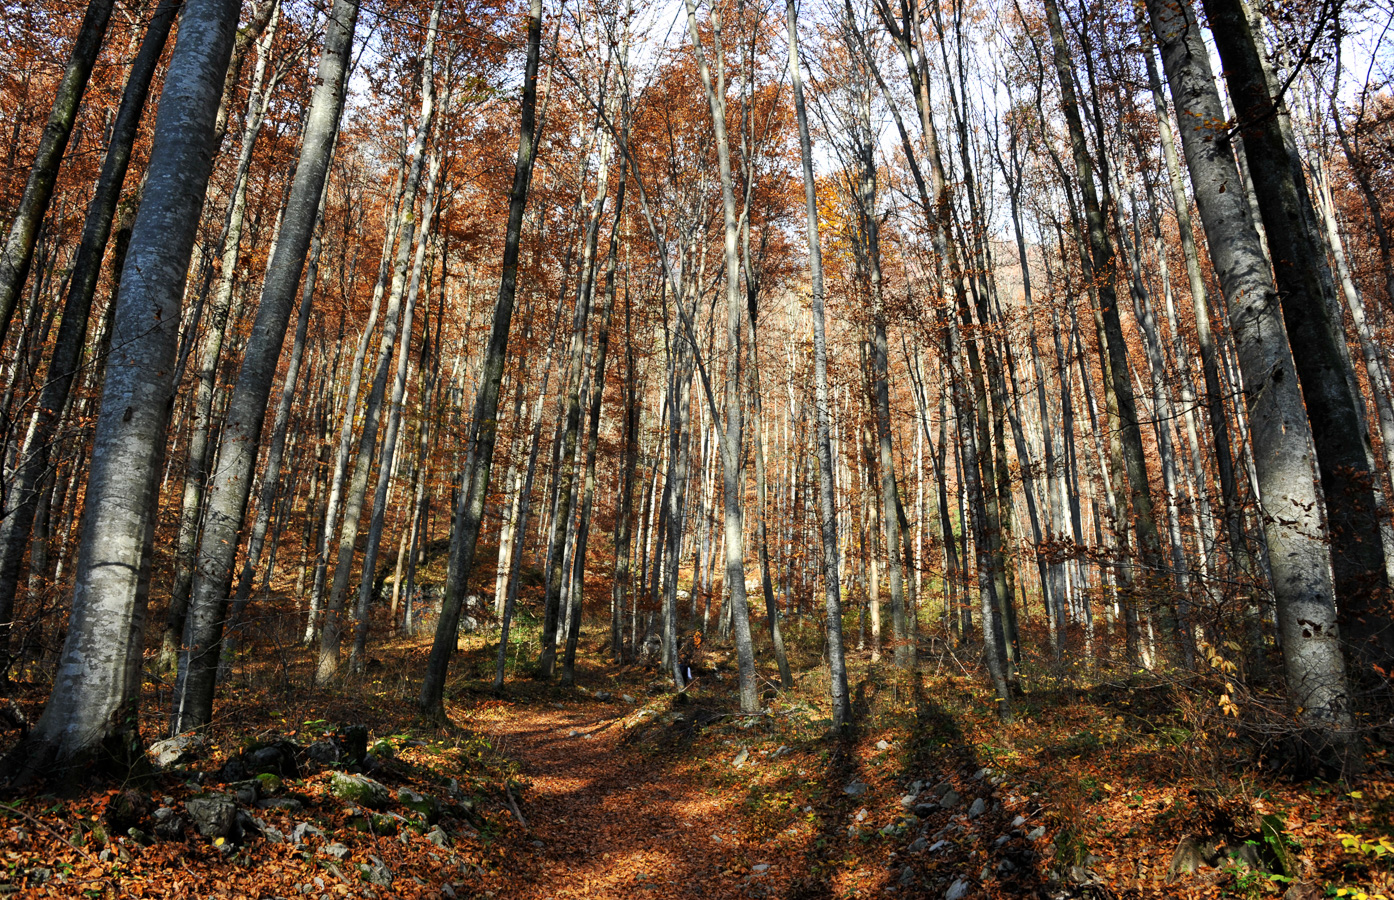 Schöner Herbstwald zu Beginn der Wanderung [28 mm, 1/80 Sek. bei f / 10, ISO 400]